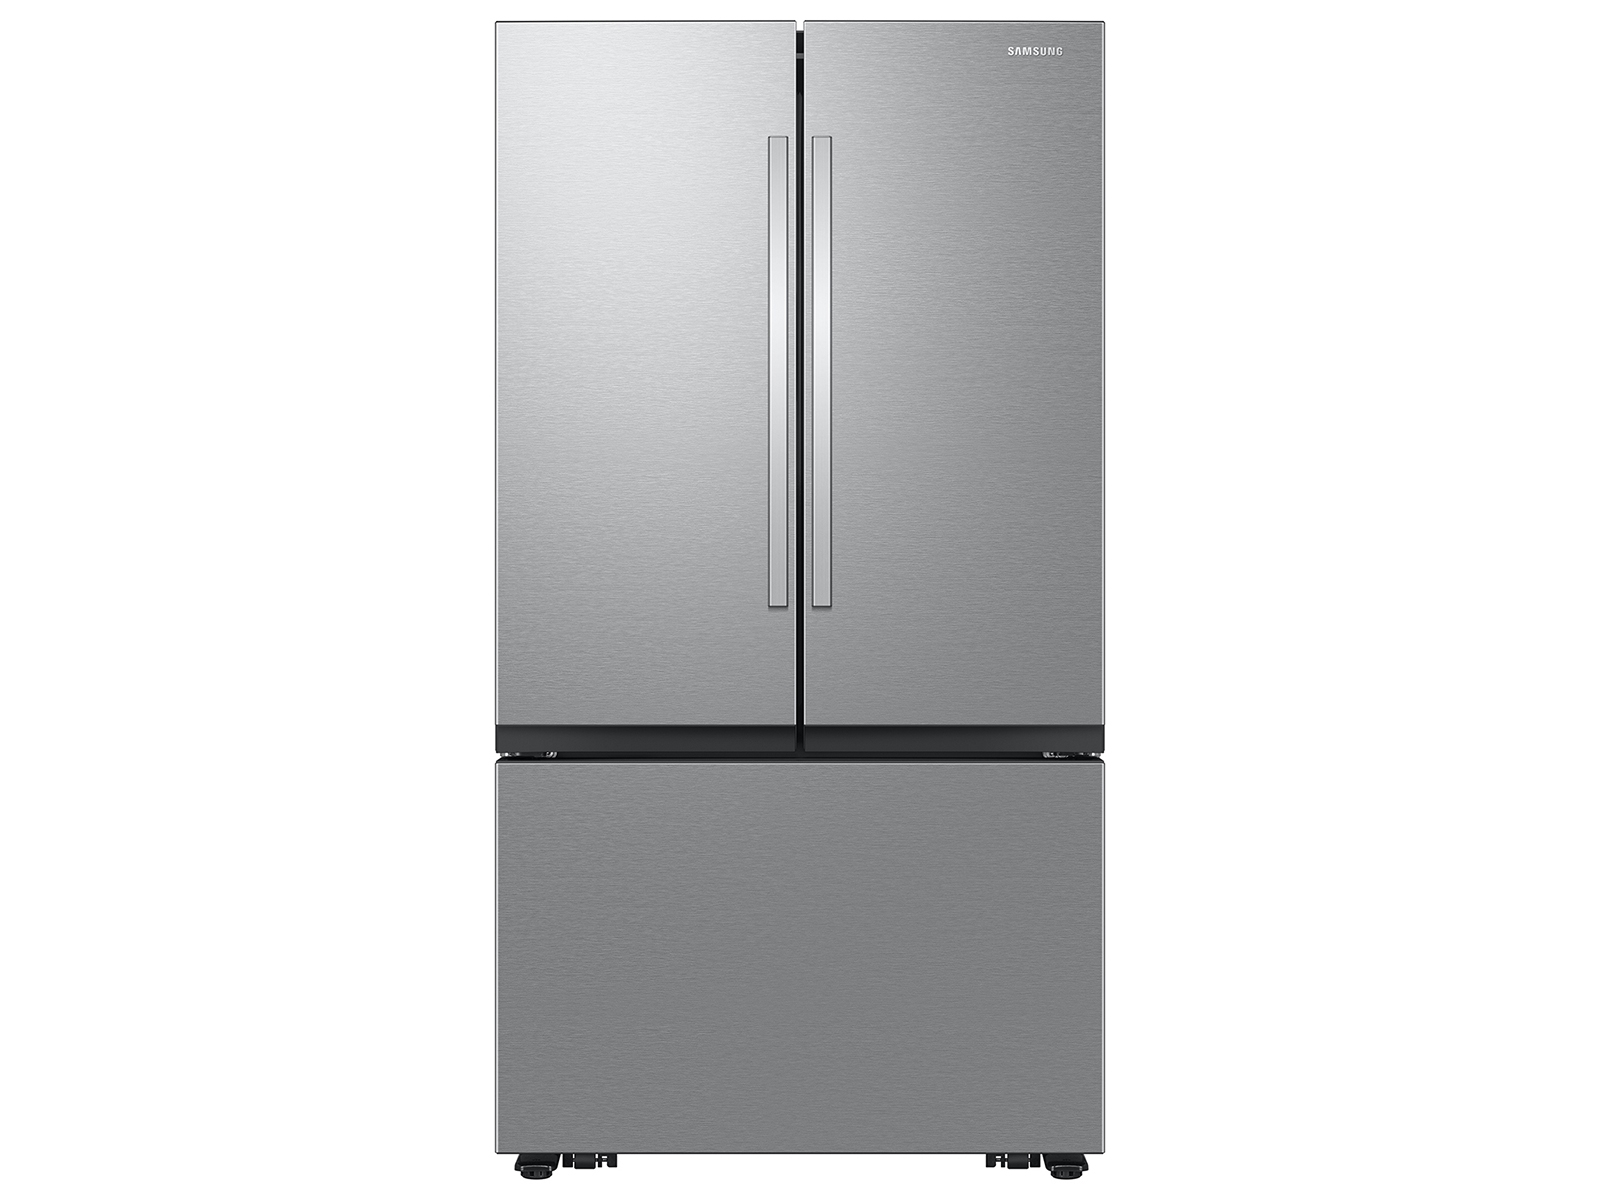 Samsung Refrigerator In-Depth Review (Model RF261BEAESR) - Prudent